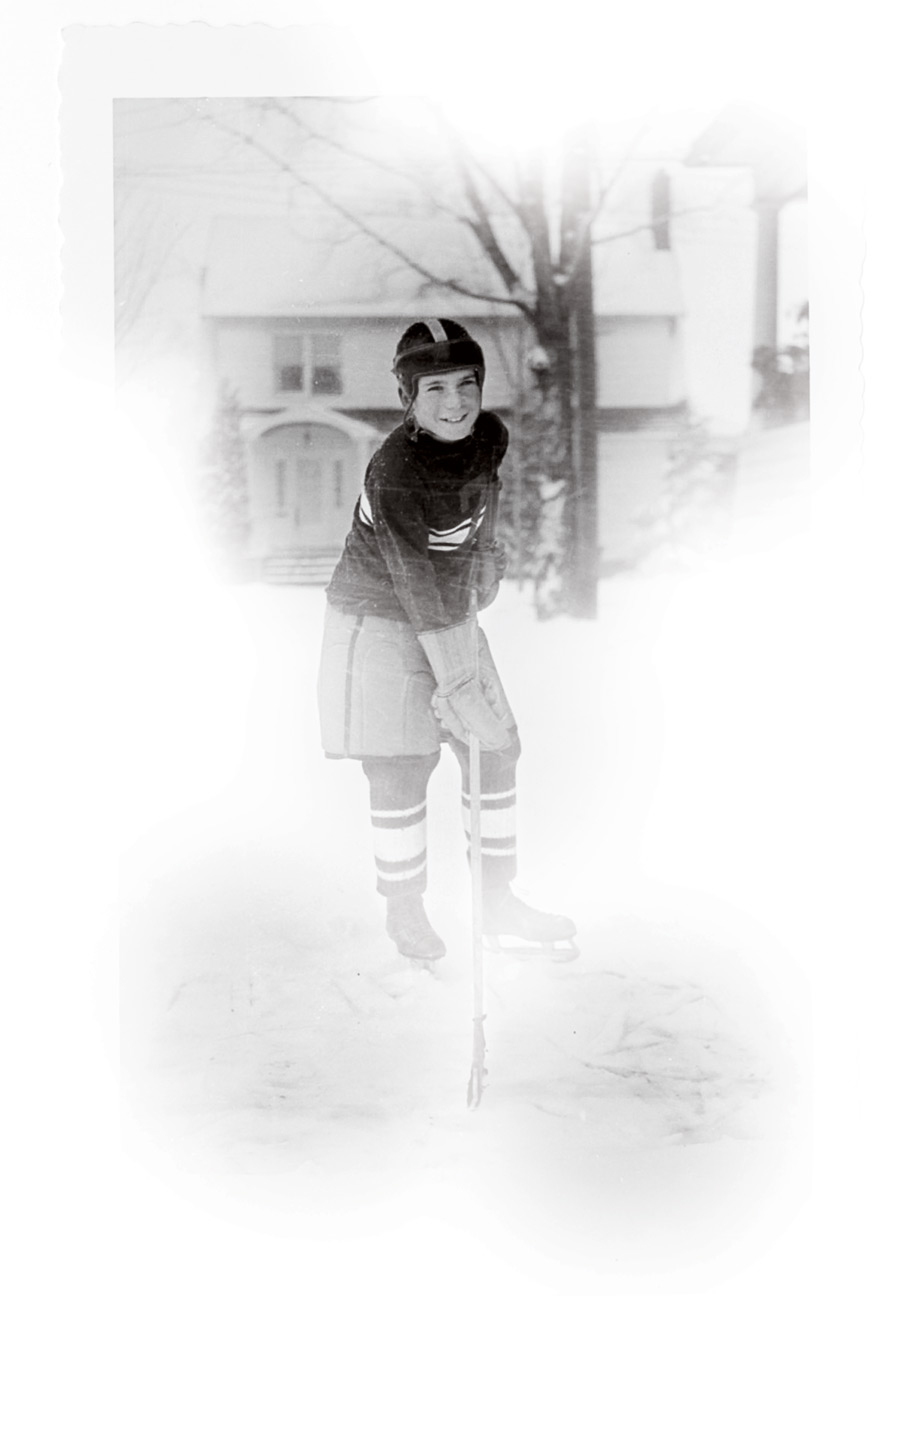 Childhood photo of Steve Riggs in hockey attire